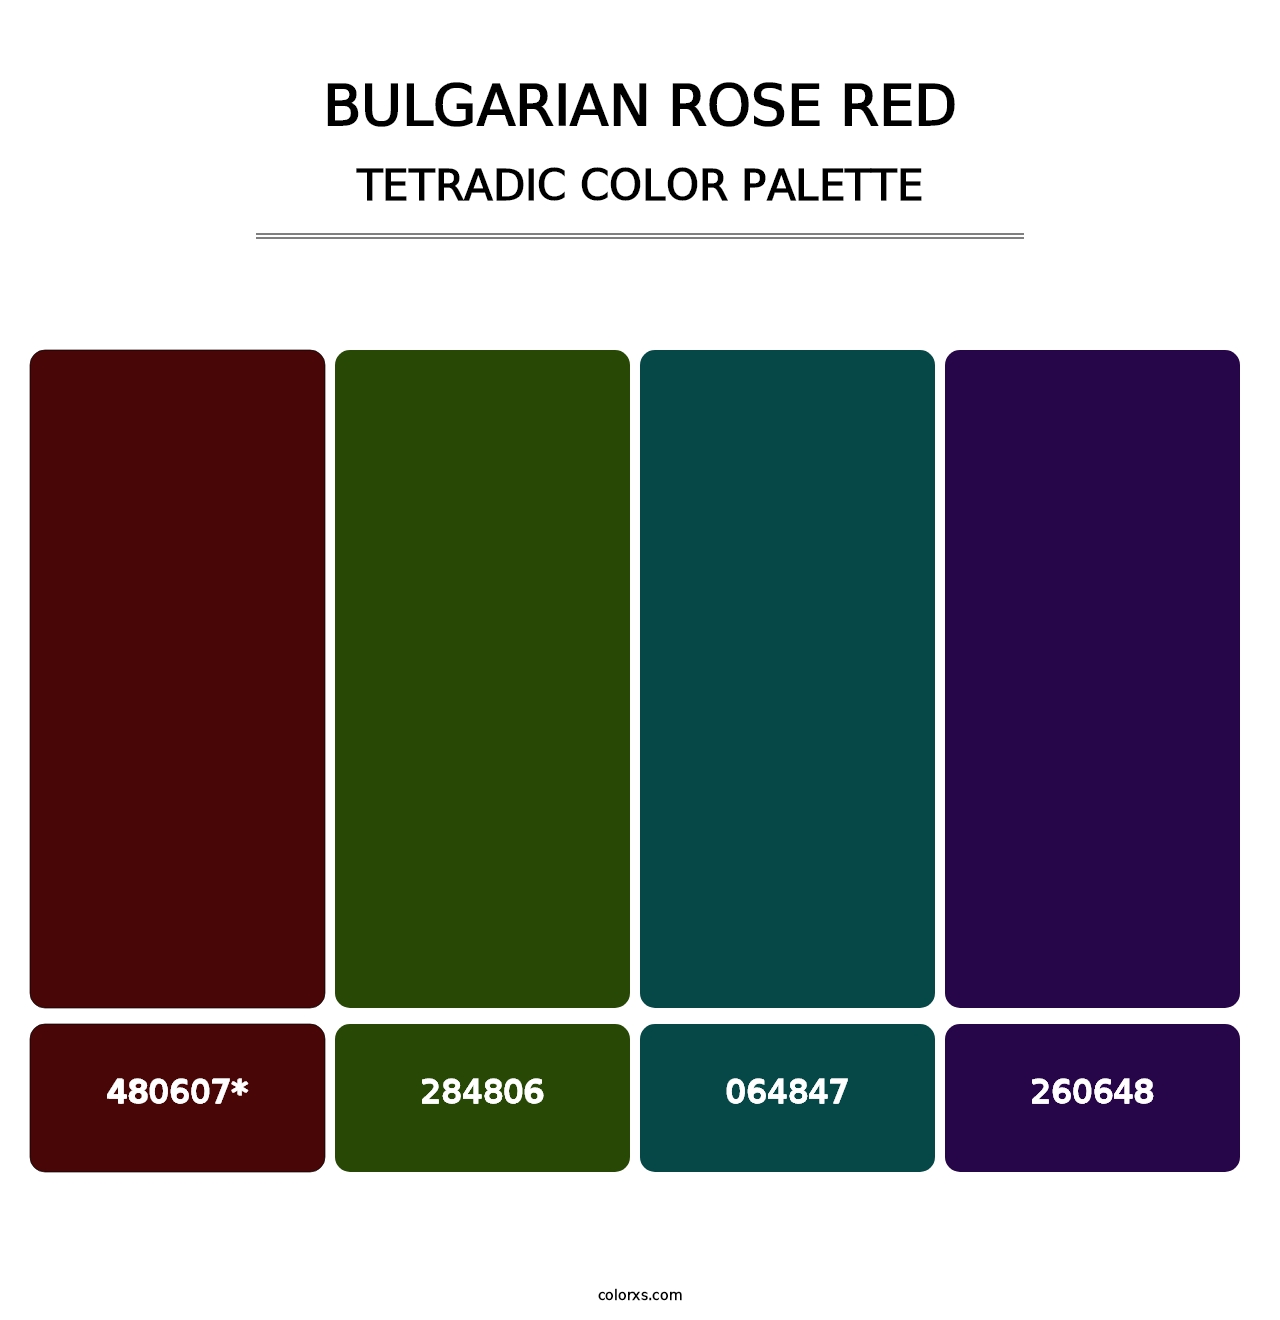 Bulgarian Rose Red - Tetradic Color Palette